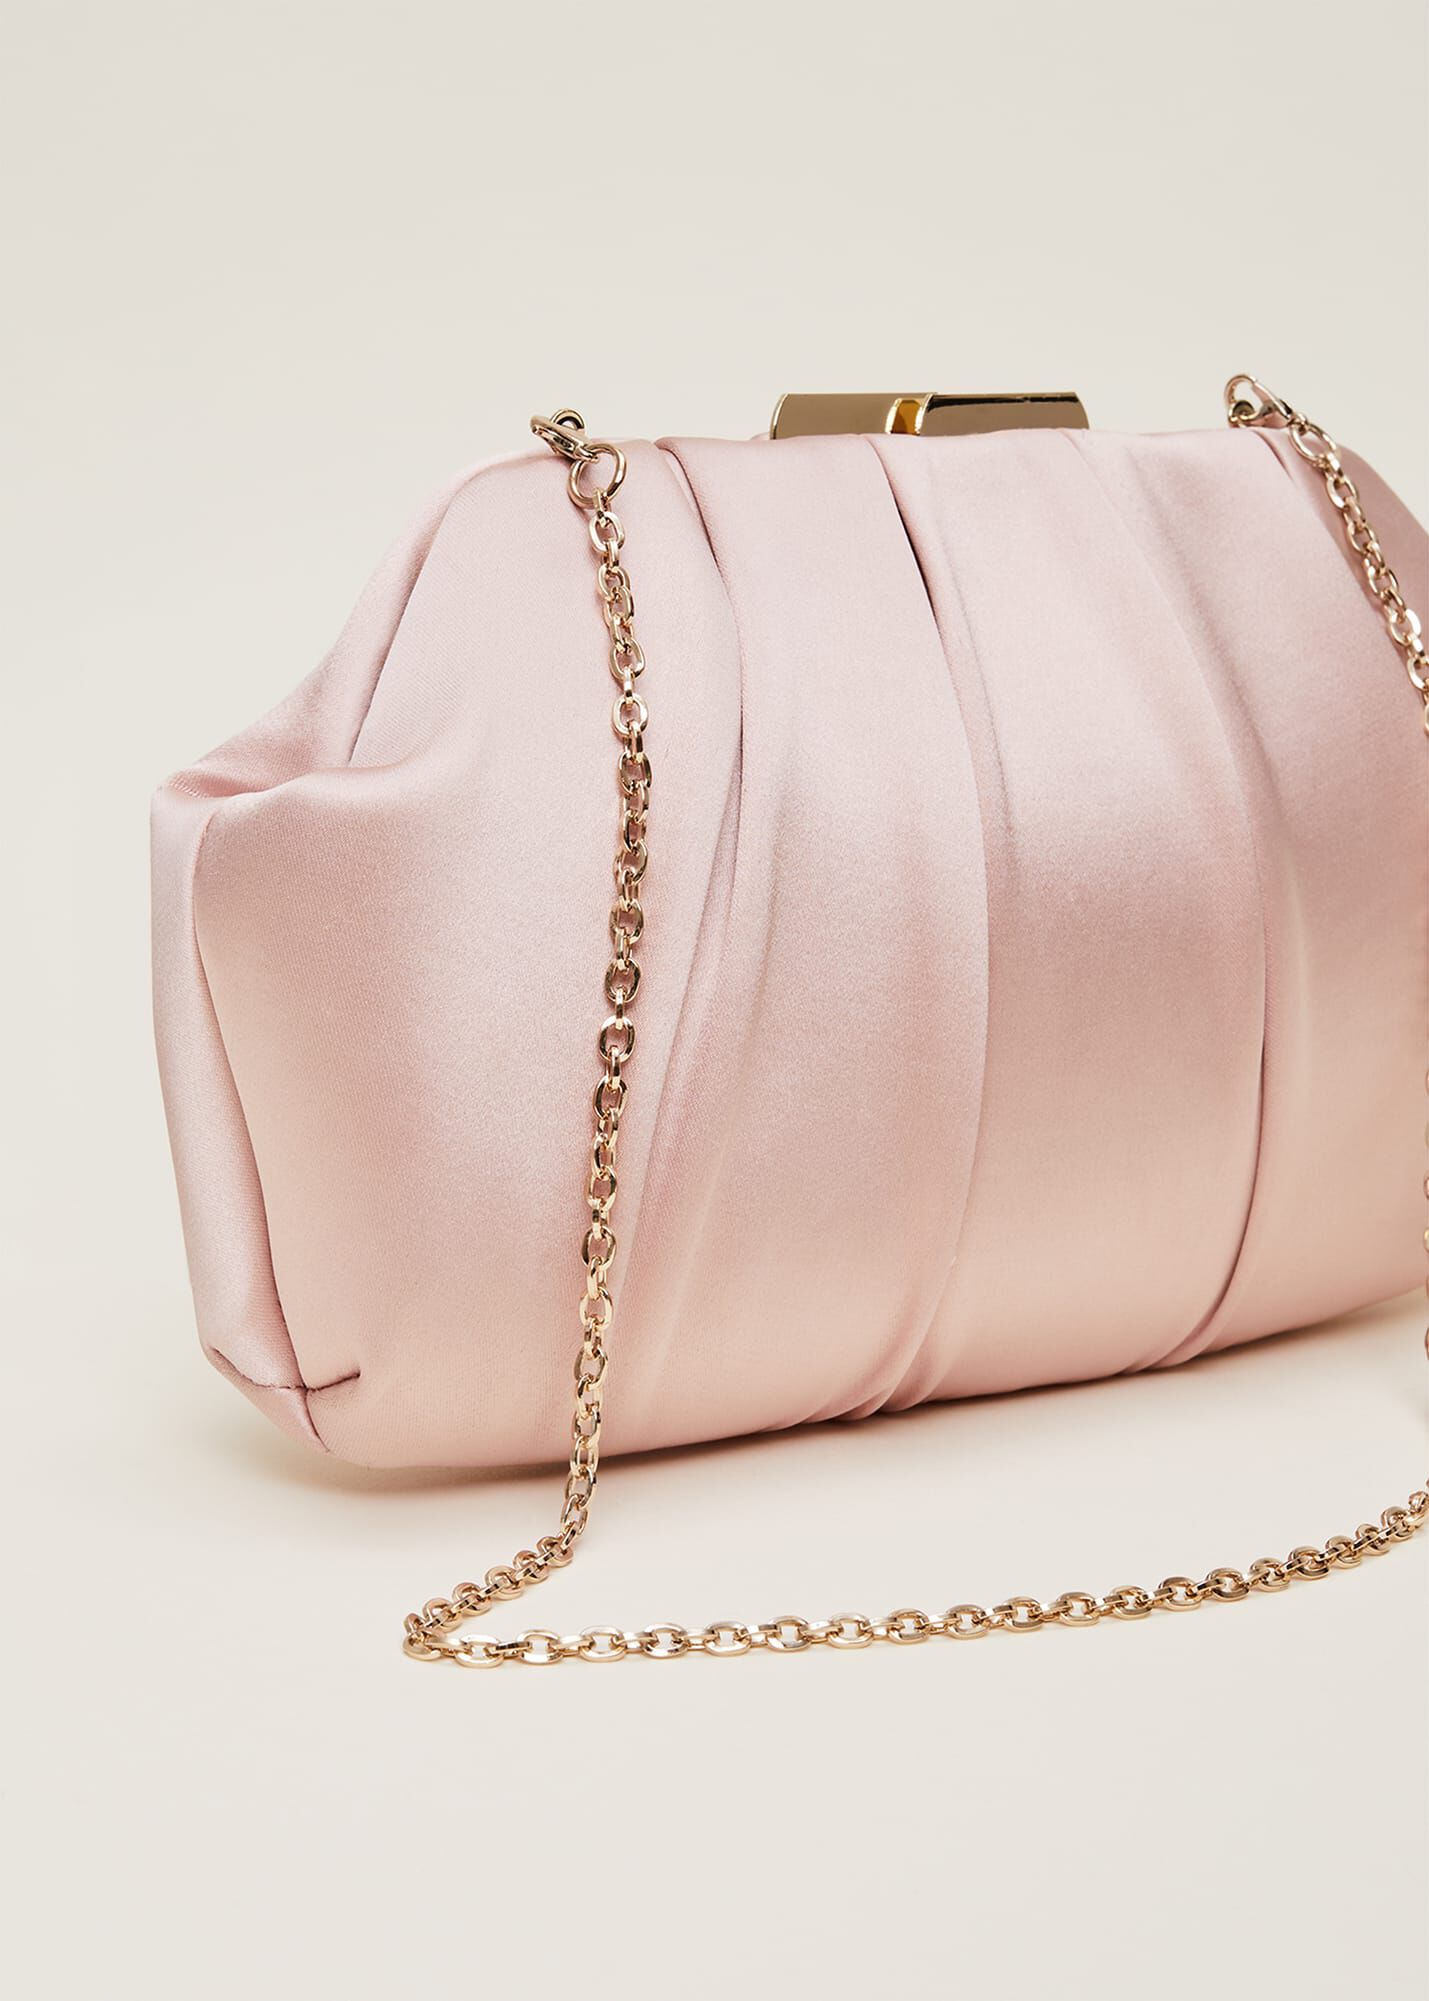 Satin Evening Bag Hot Pink Wedding Clutch - Heart Gem Closure: Handbags:  Amazon.com